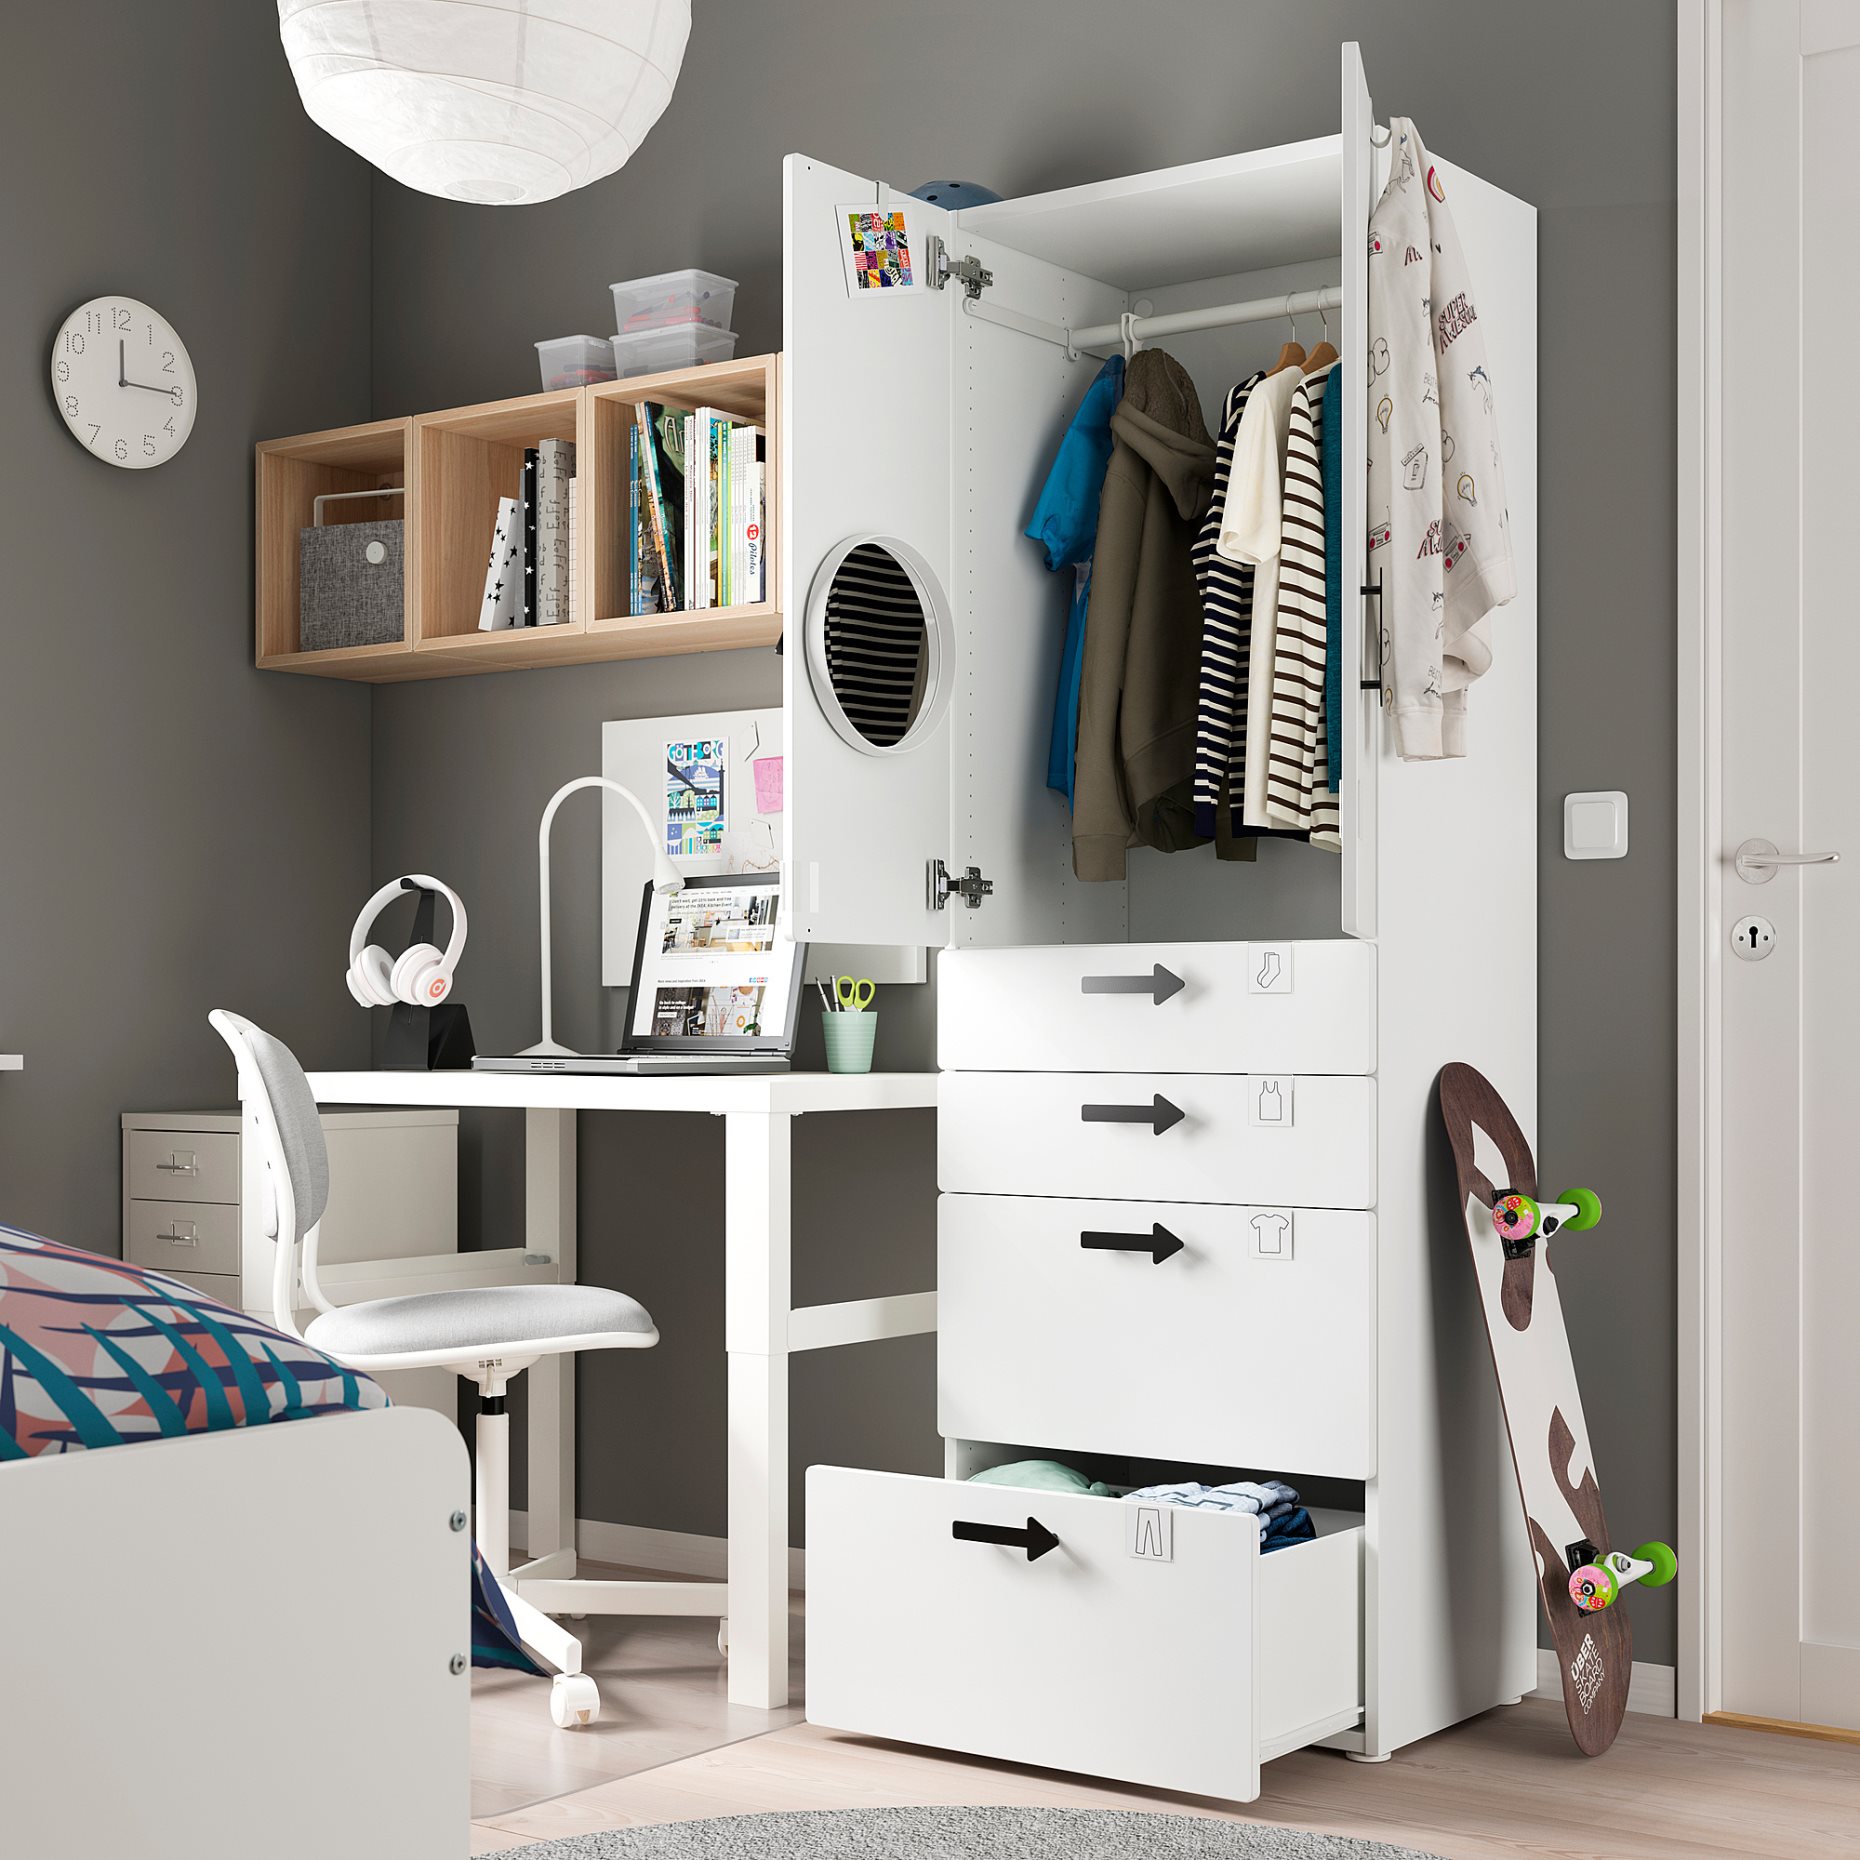 SMASTAD/PLATSA, wardrobe with 4 drawers, 60x57x181 cm, 694.283.25